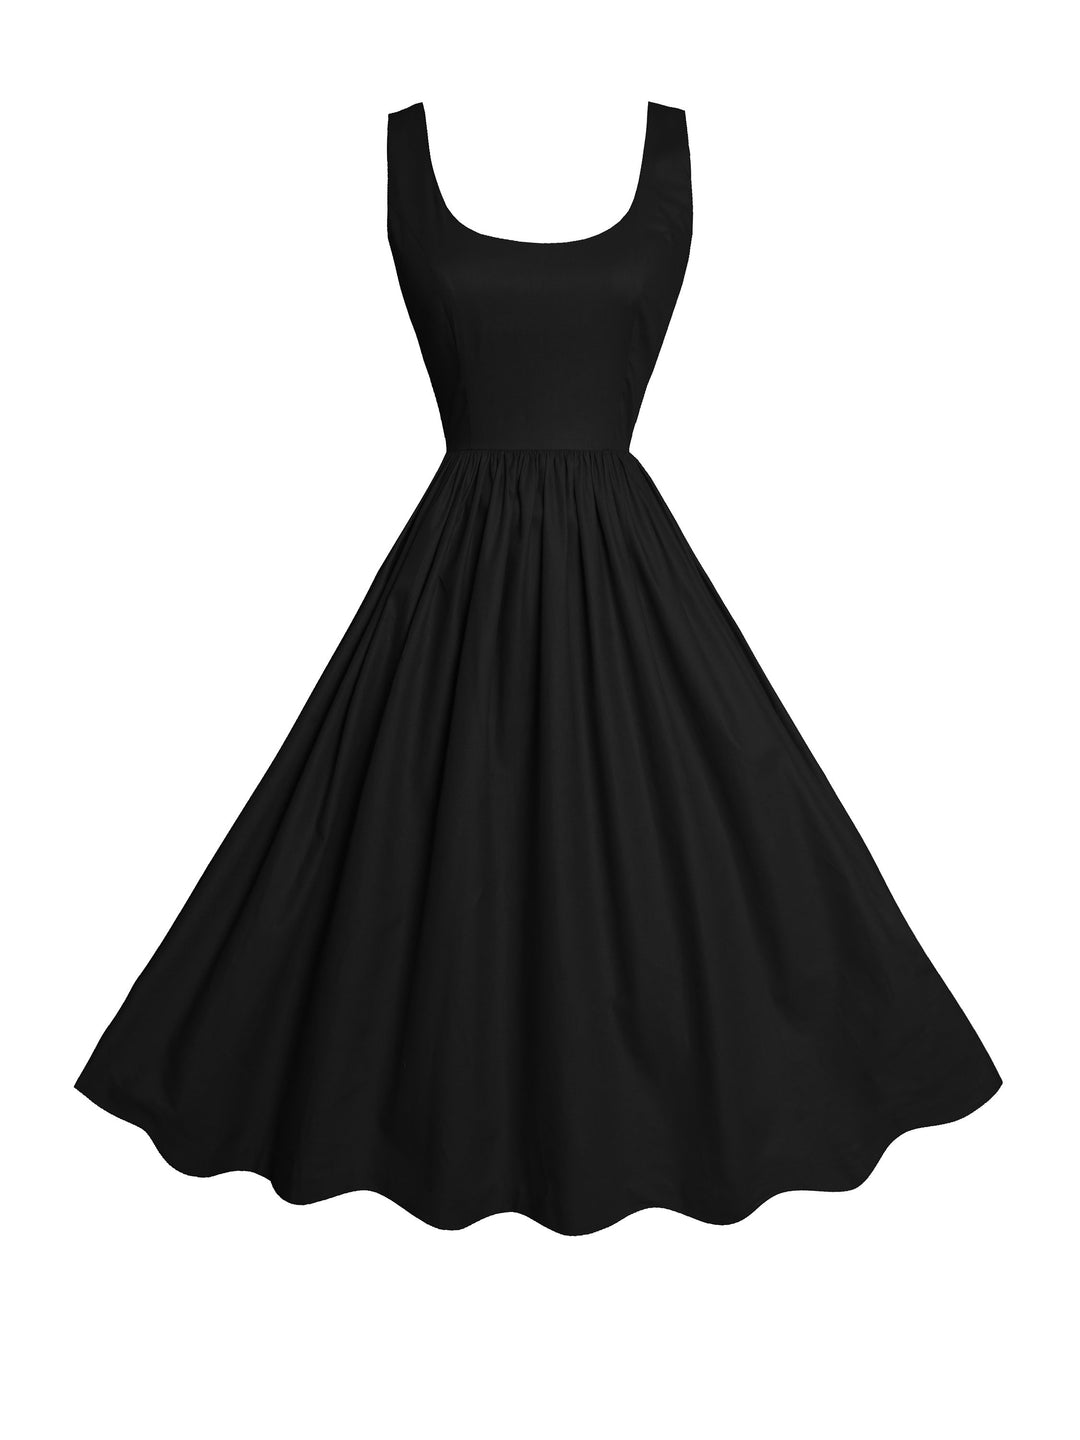 RTS - Size S - Emily Dress in Raven Black Cotton